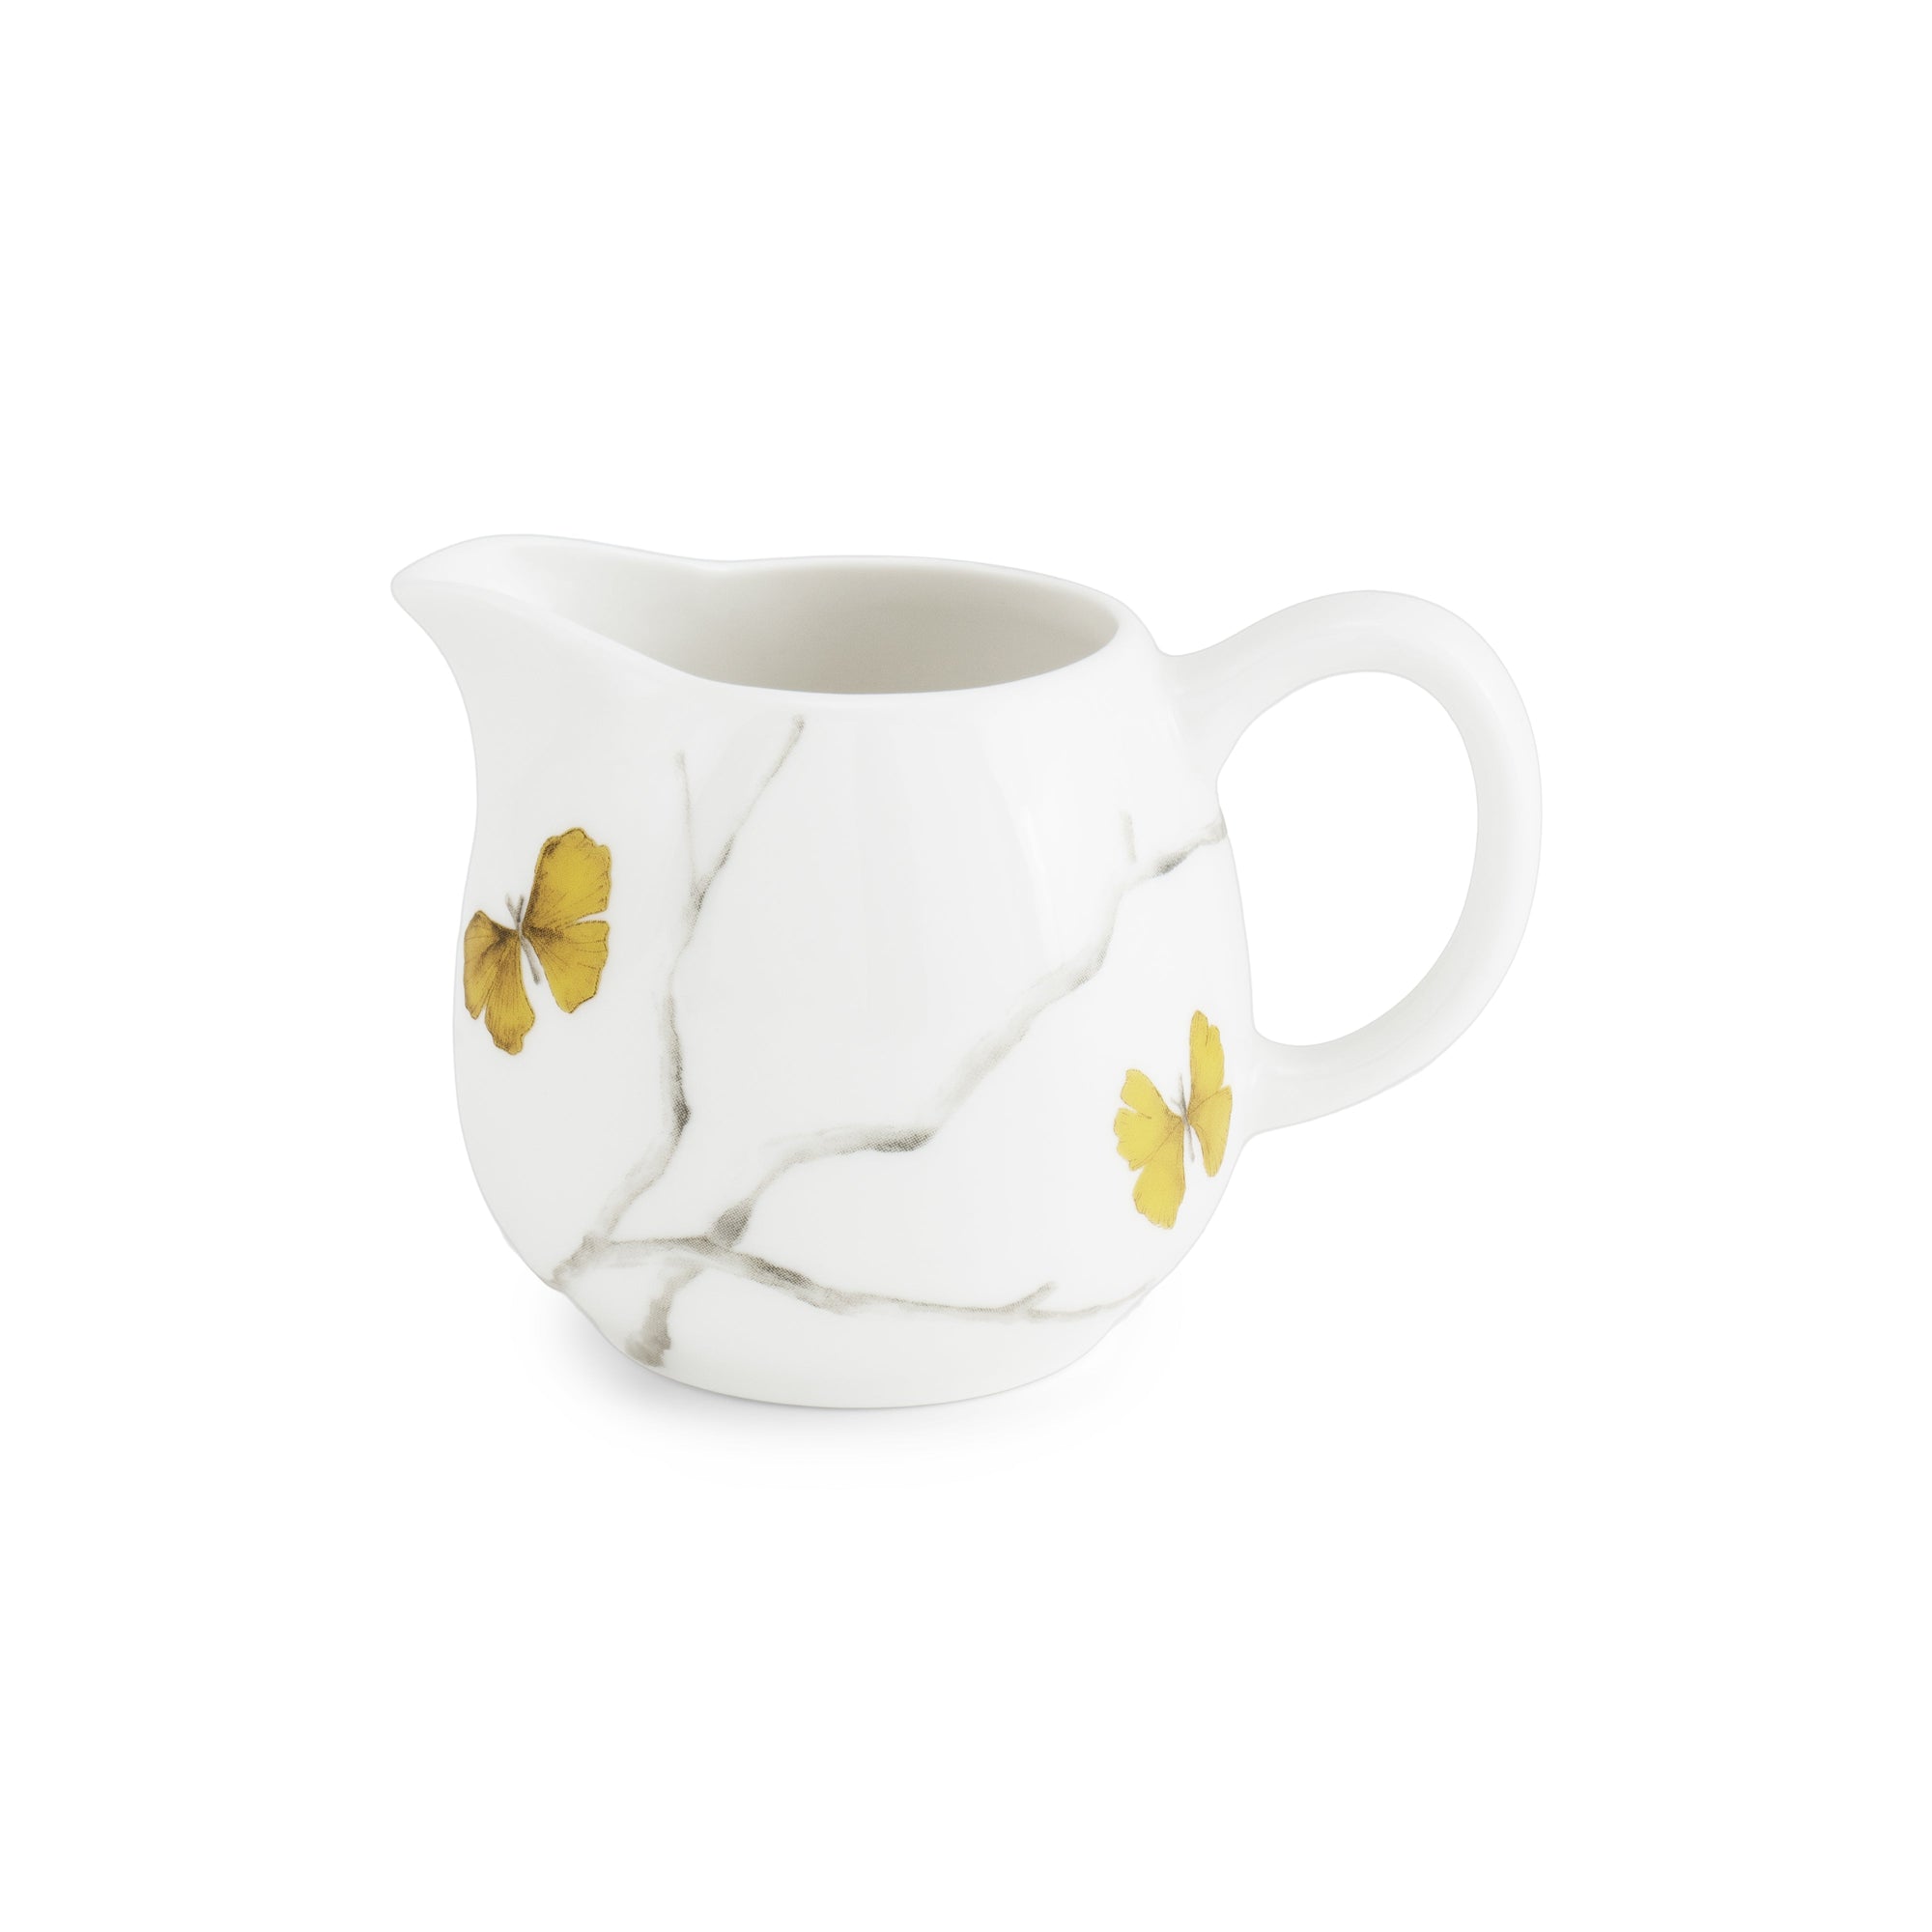 Michael Aram Butterfly Ginkgo Porcelain Tea Set